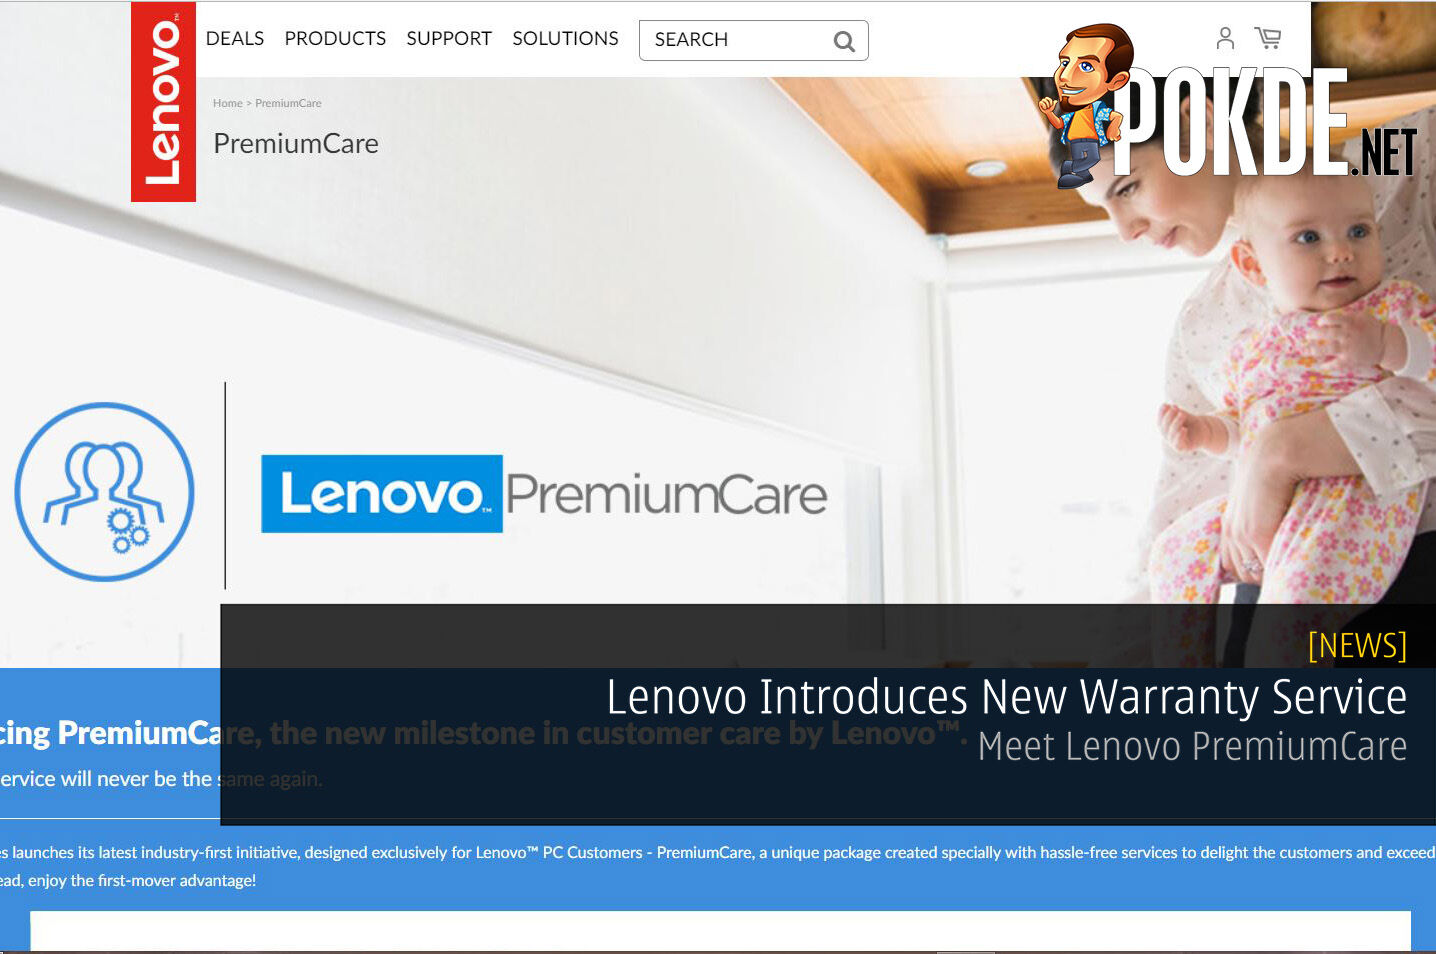 Lenovo Introduces New Warranty Service - Meet Lenovo PremiumCare 28